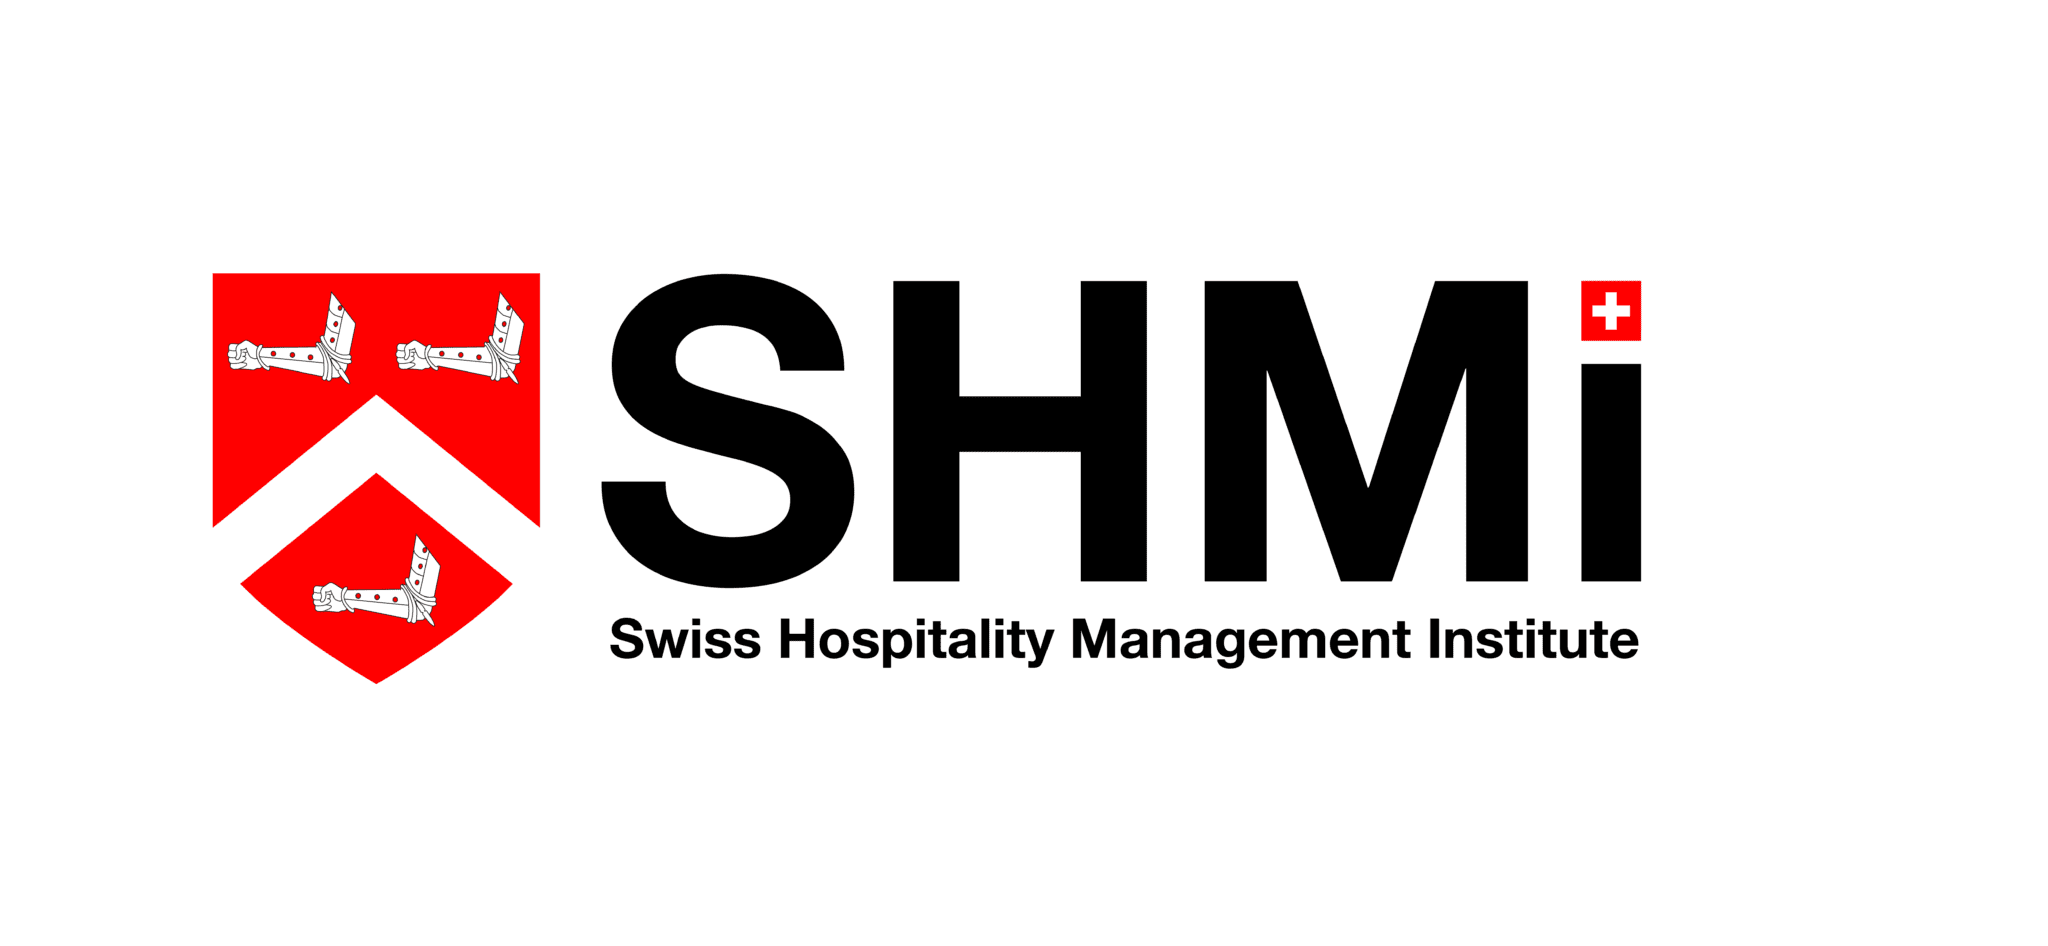 Swiss Hospitality Management Institute